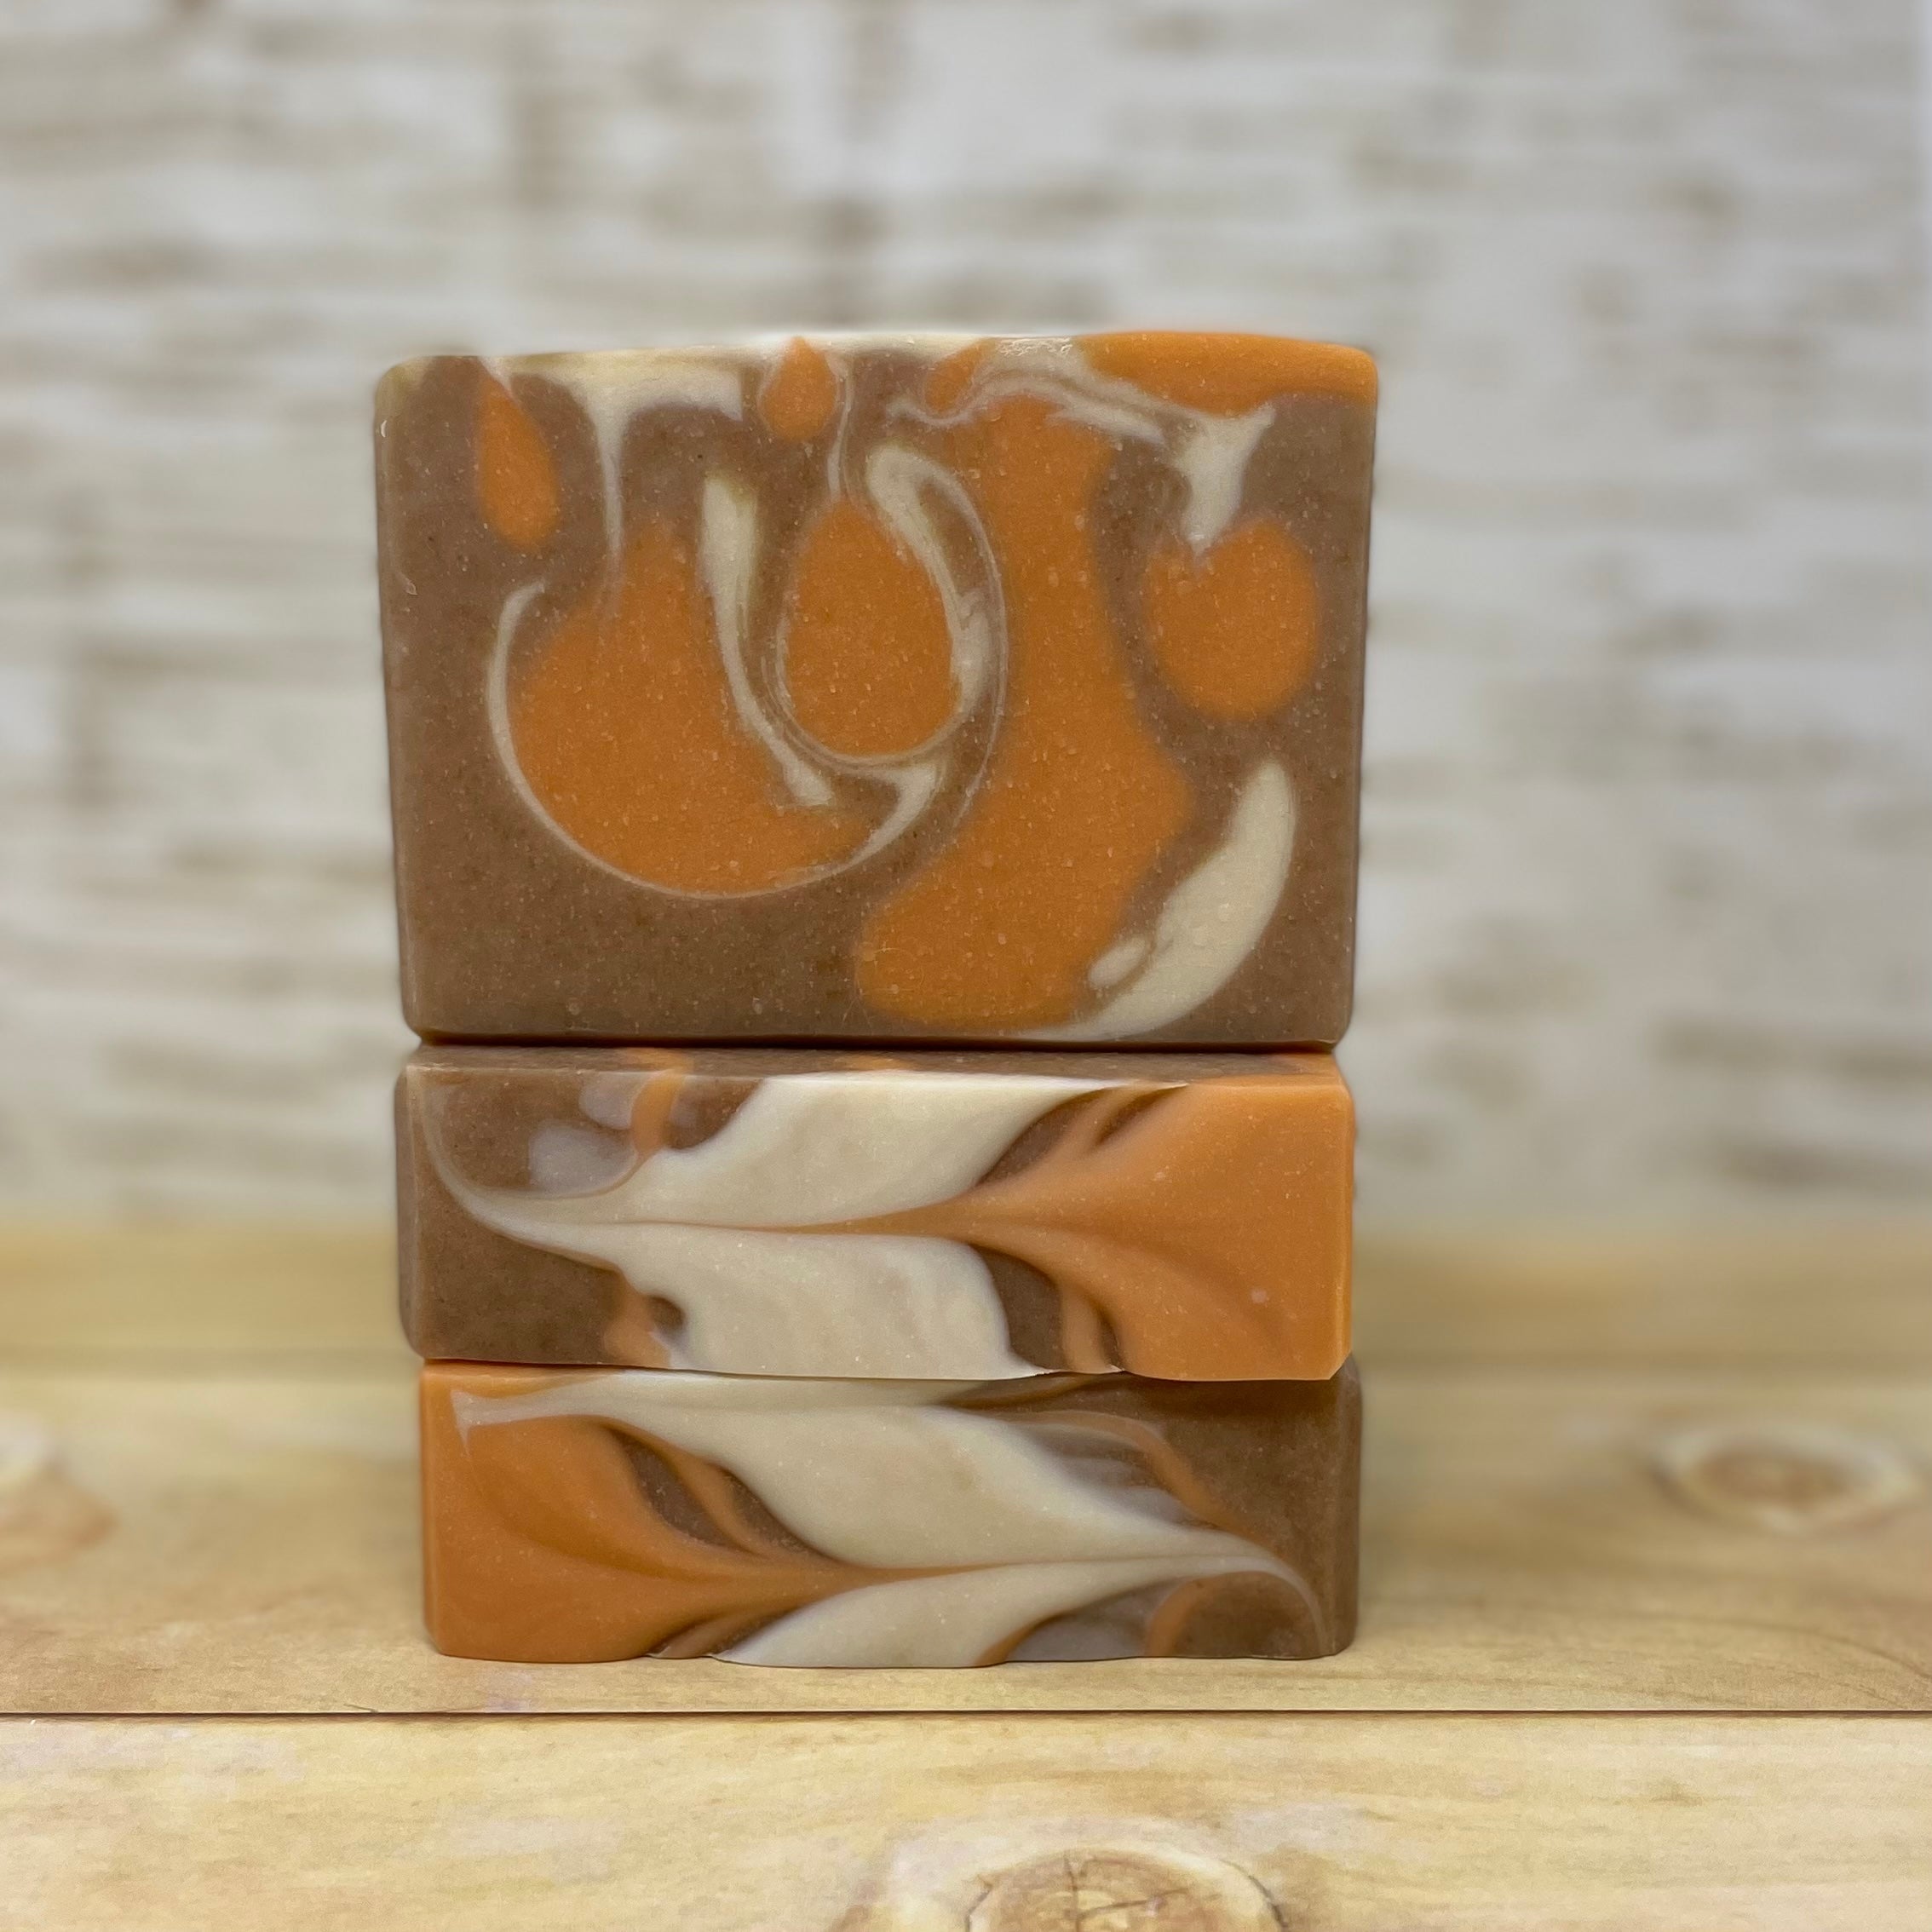 Pumpkin Spice Latte soap